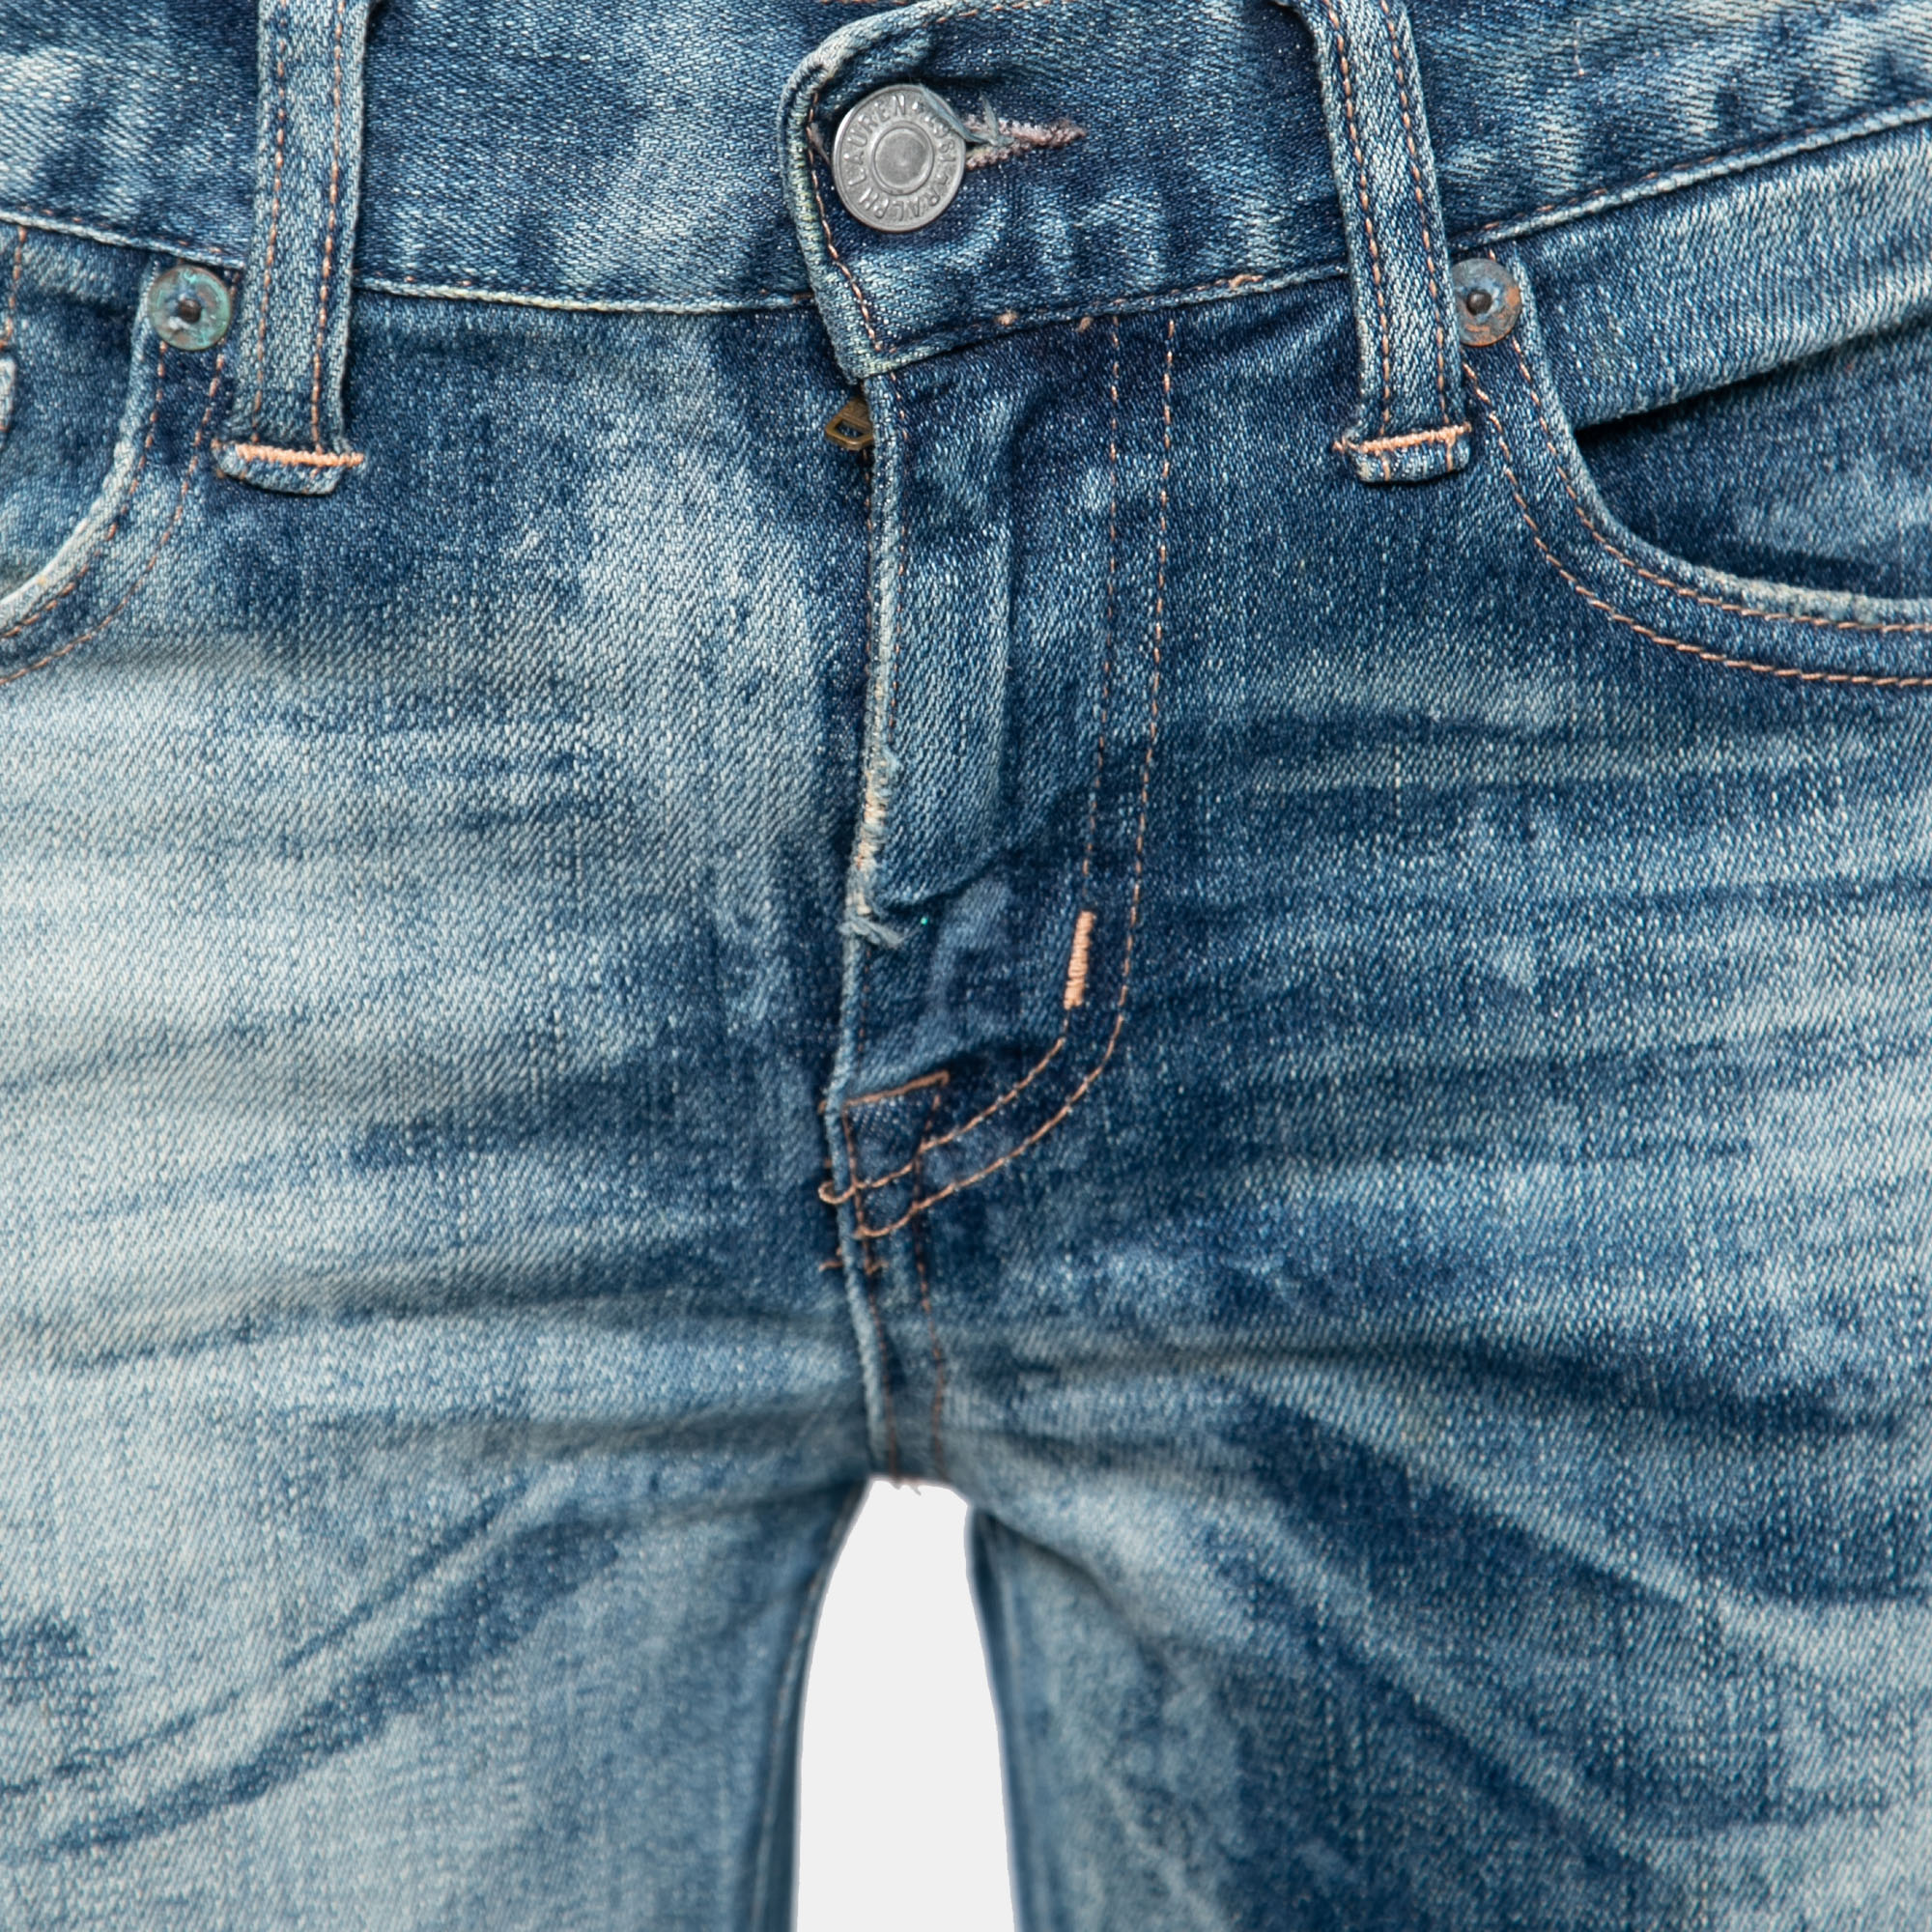 Polo Ralph Lauren Blue Denim Distressed Jeans S Waist 28